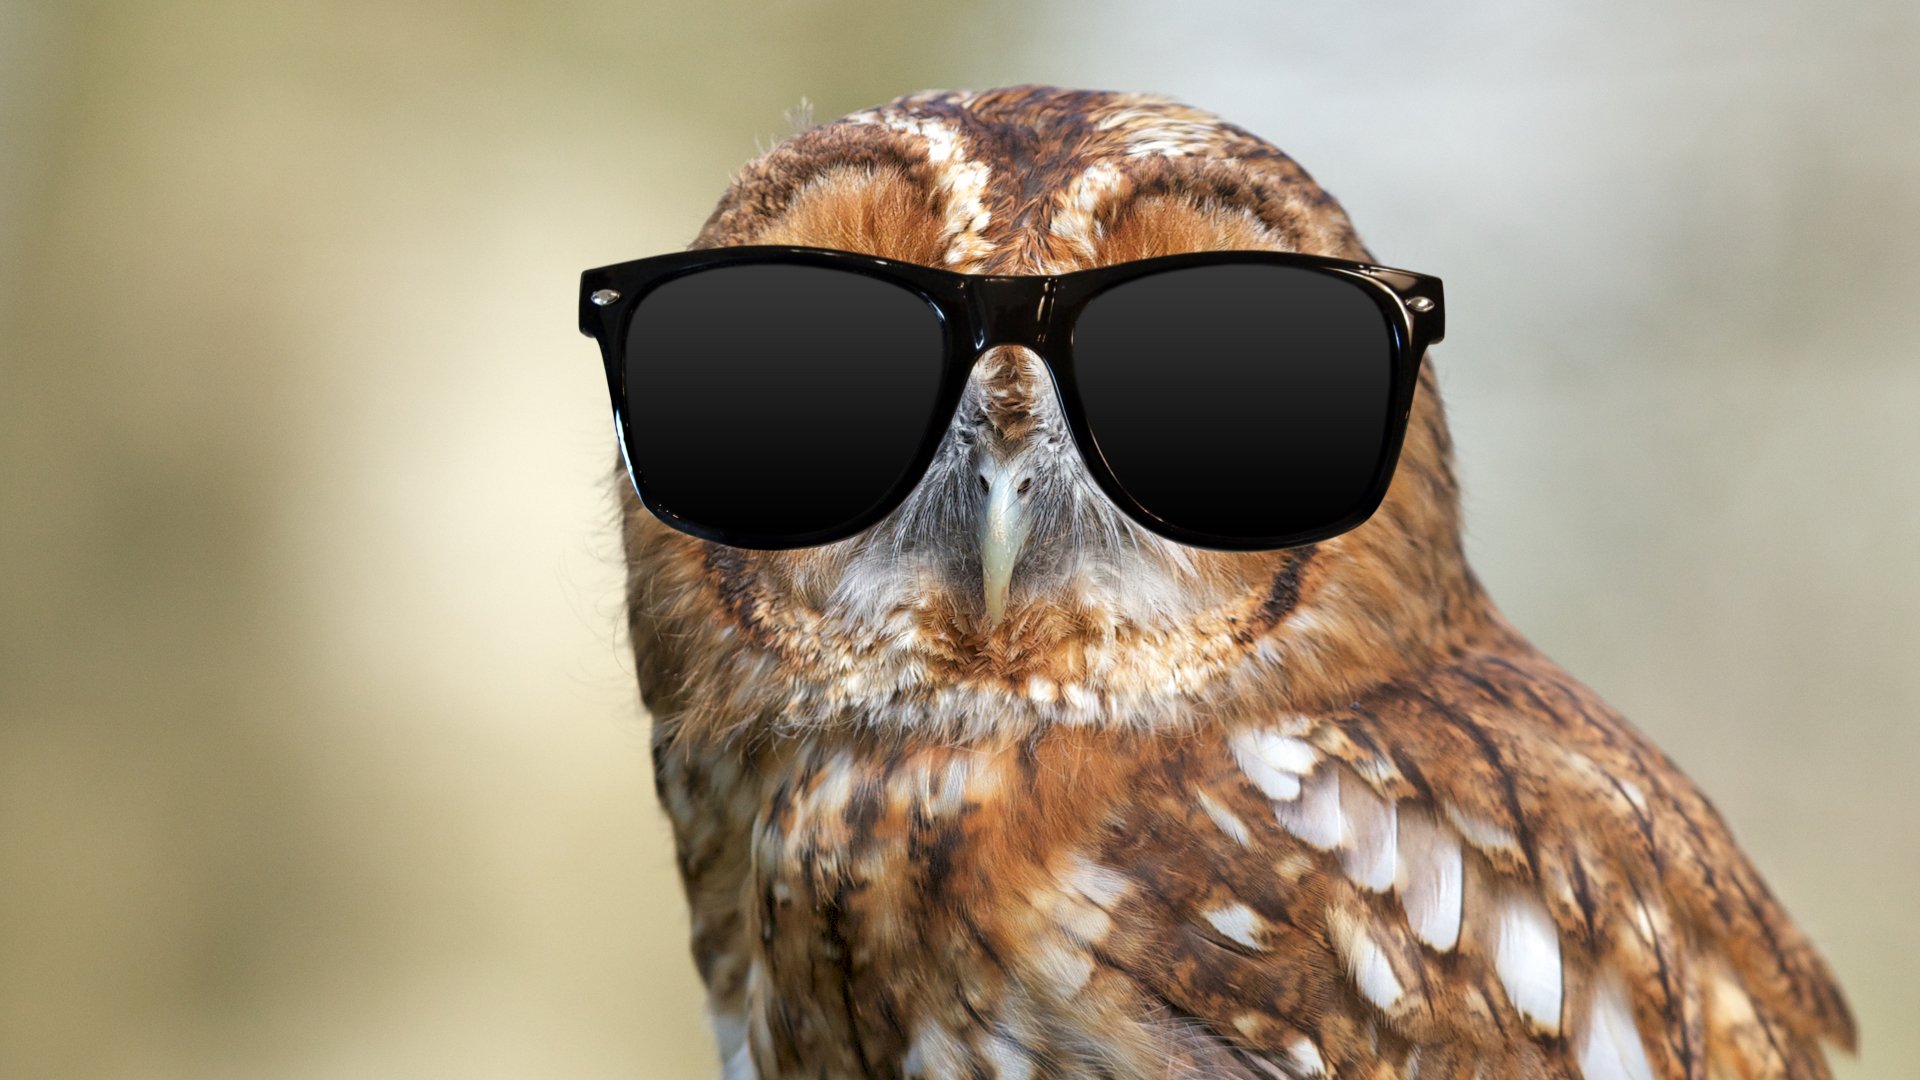 An owl wearing sunglasses